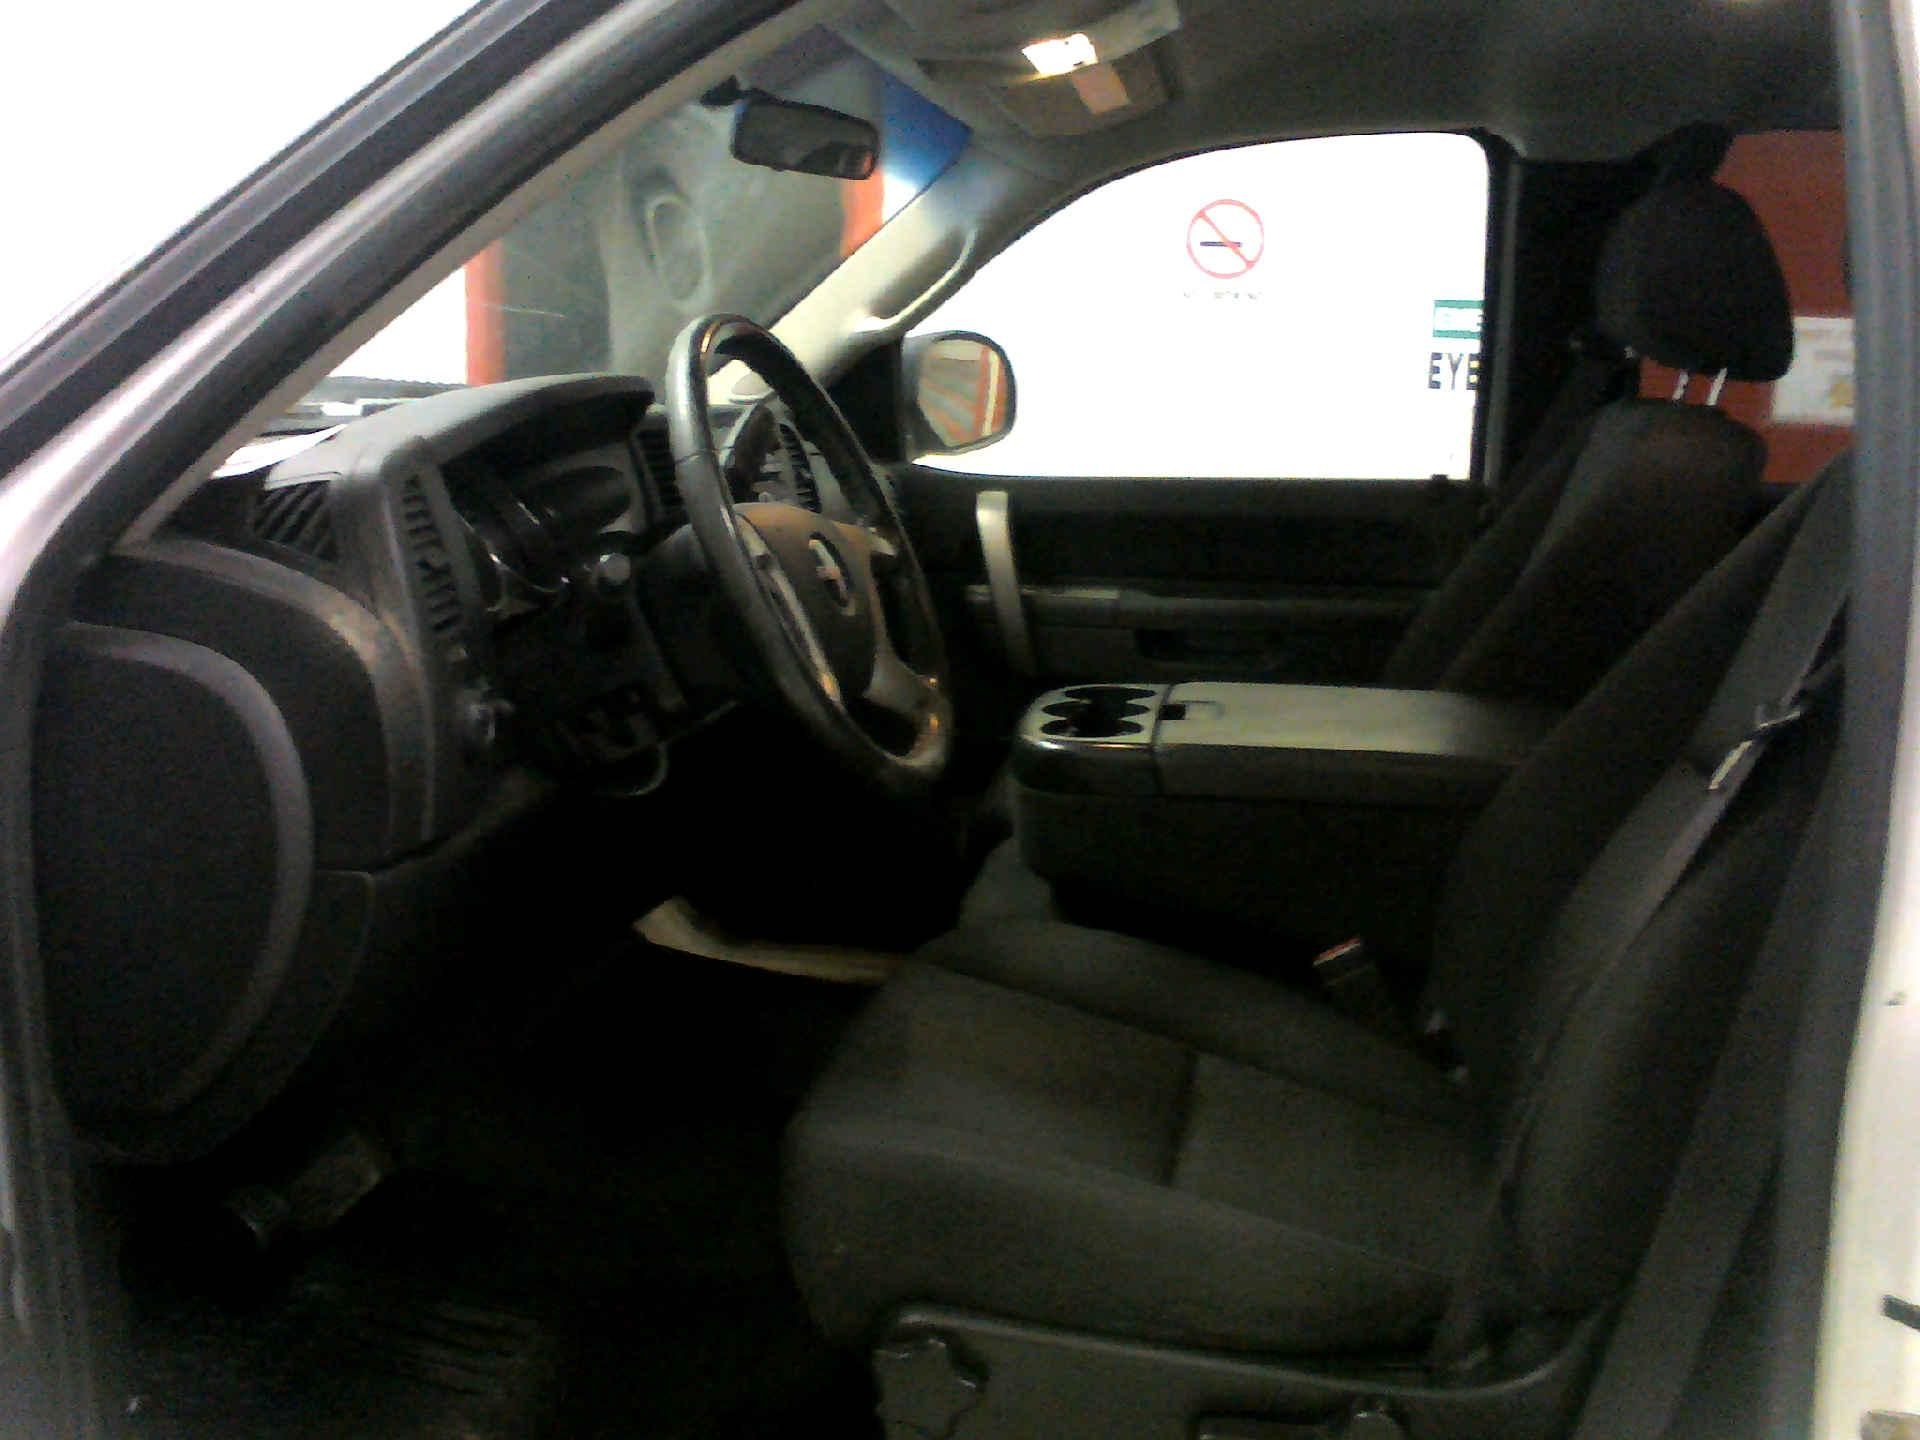 2011 GMC SIERRA 2500HD SLE EXT. CAB 4WD 6.0L V8 OHV 16V FFV AUTOMATIC SN:1GT220CG2BZ266162 OPTIONS: - Image 5 of 9